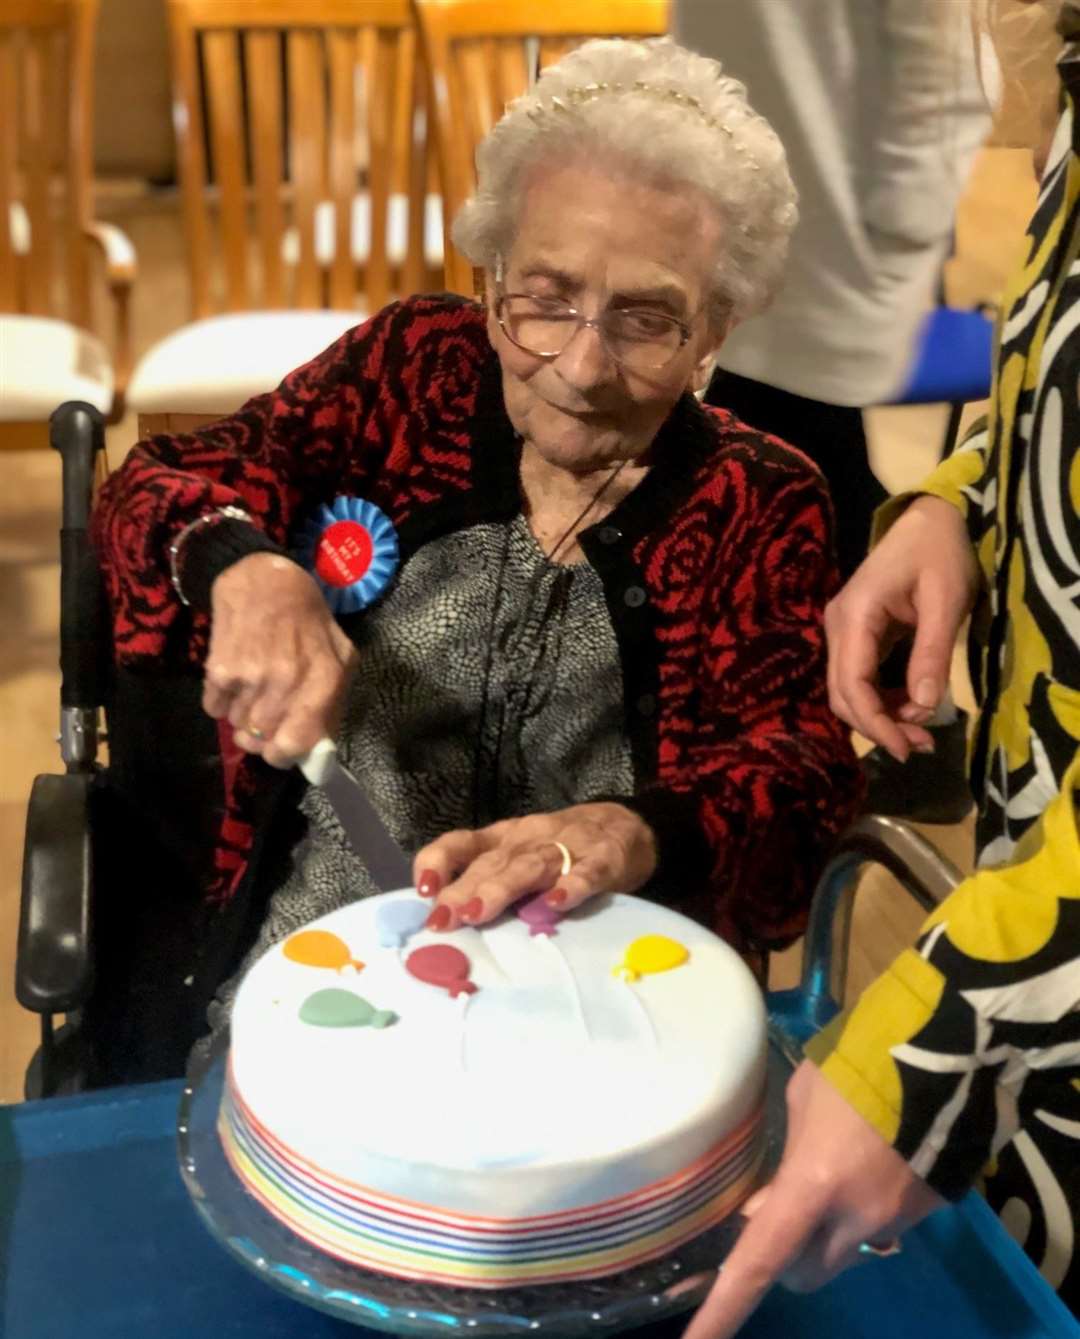 Vera cutting her cake during her birthday celebrations